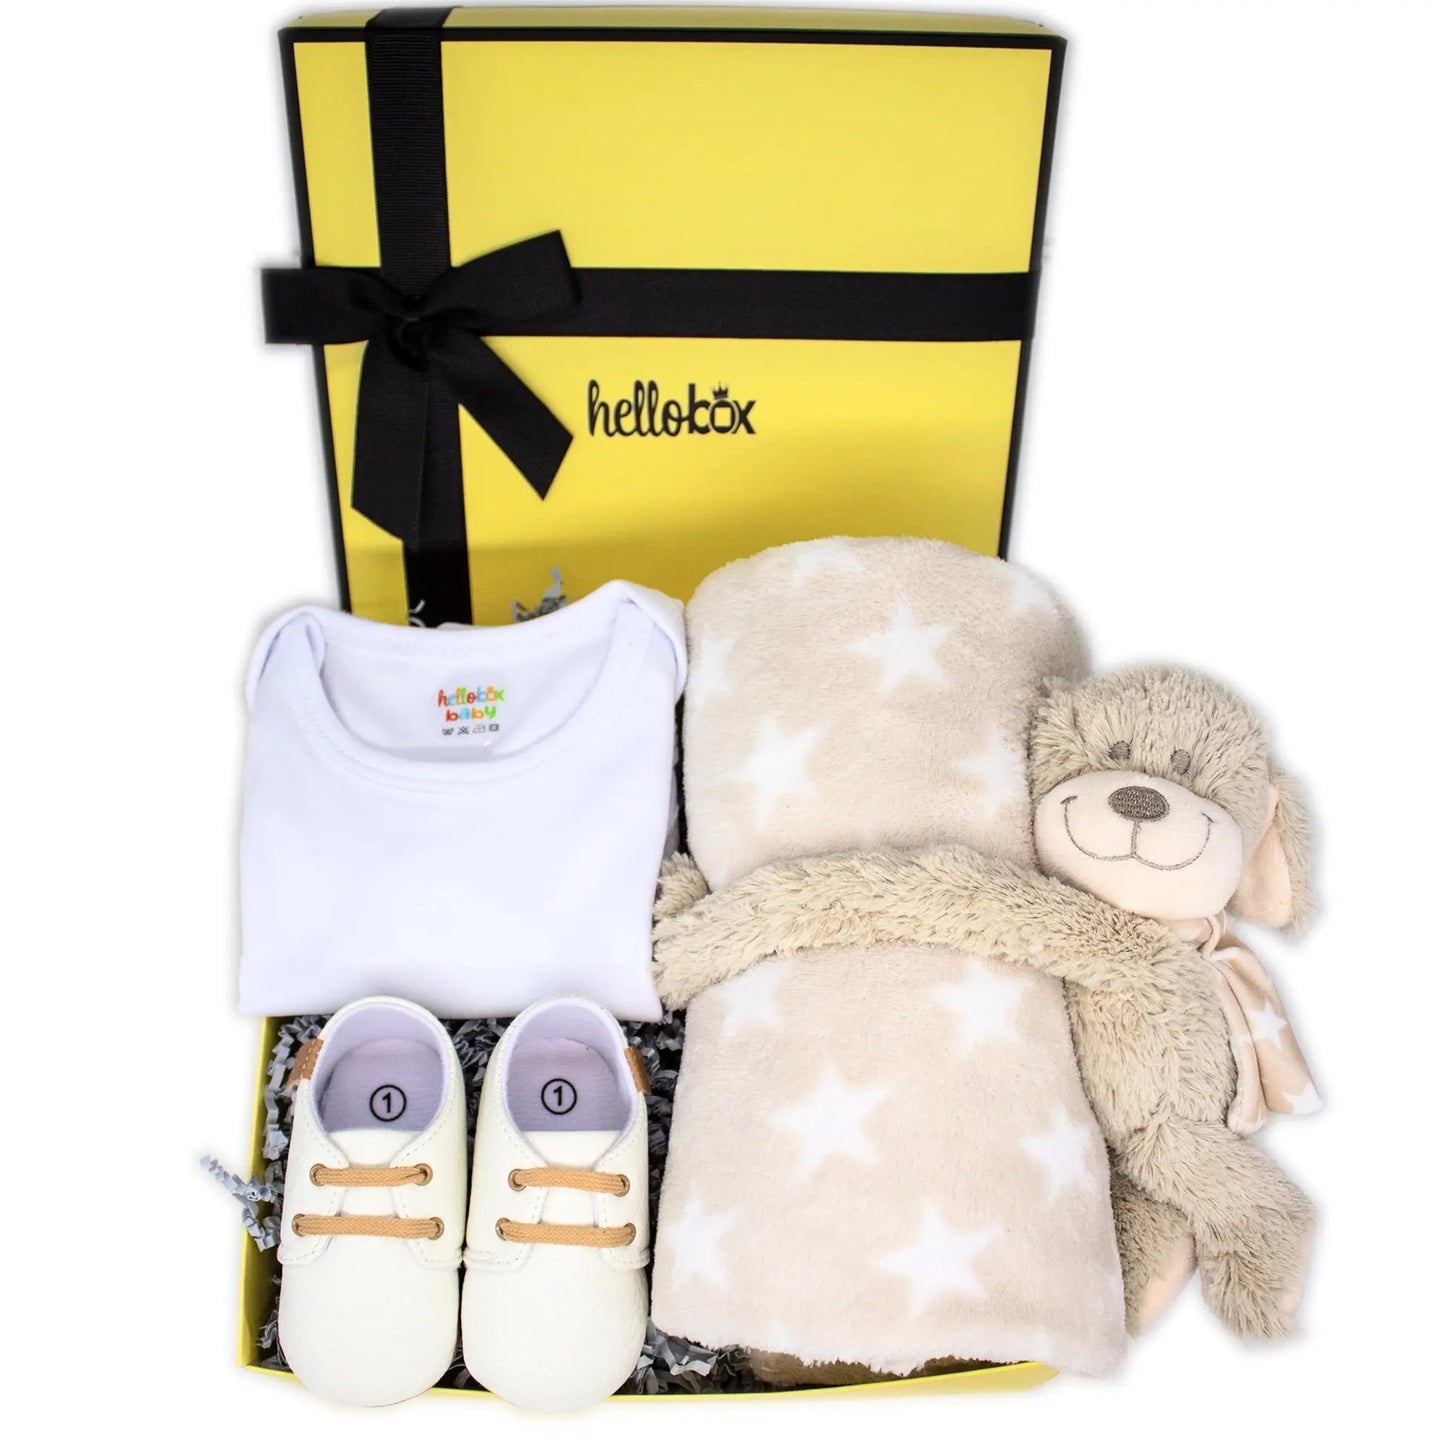 HelloBox! 4pc Newborn Infant Gift Set